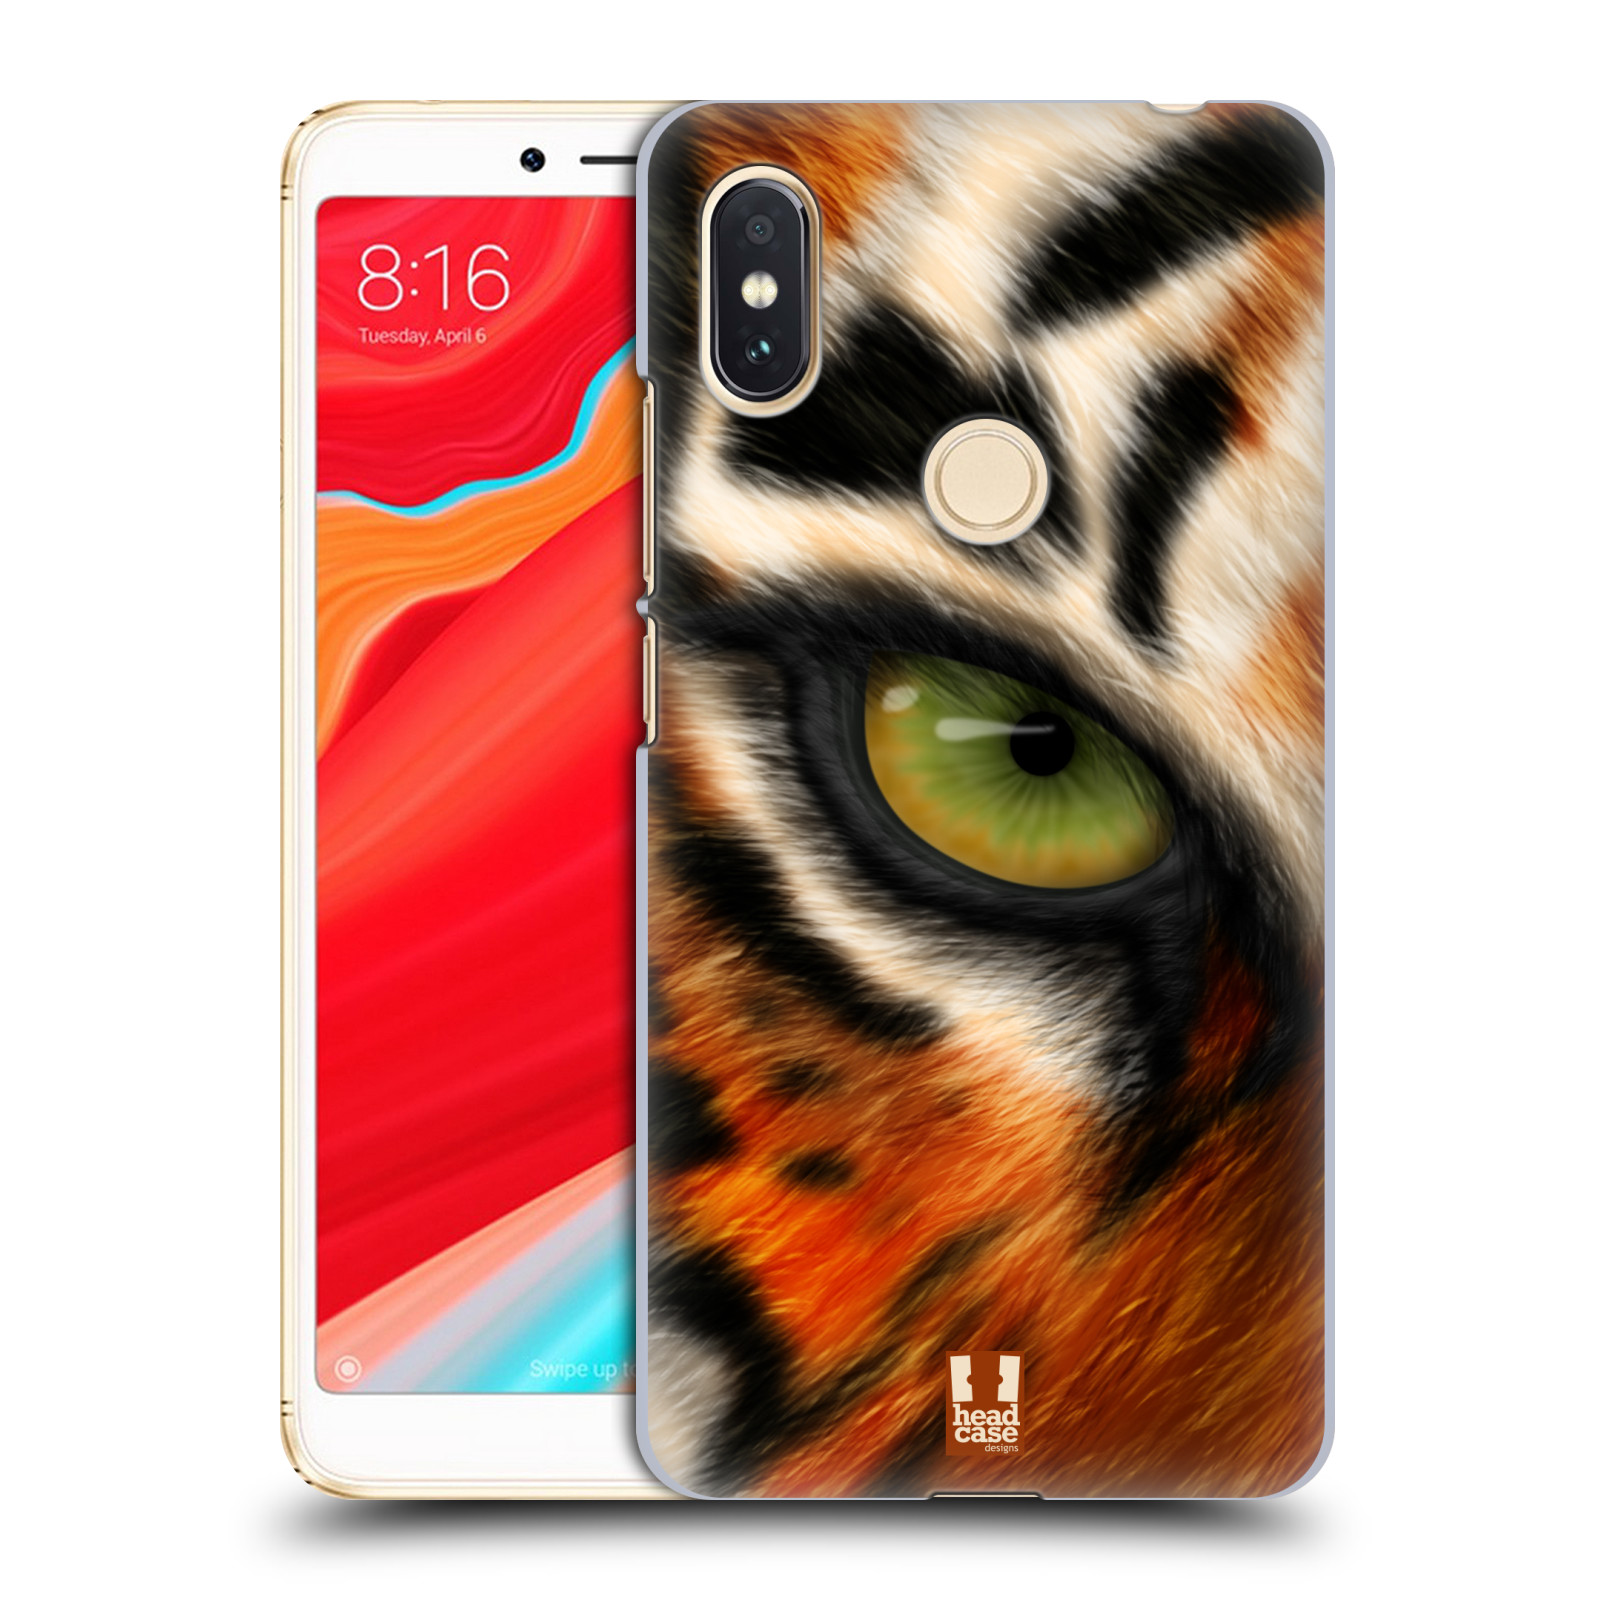 HEAD CASE plastový obal na mobil Xiaomi Redmi S2 vzor pohled zvířete oko tygr